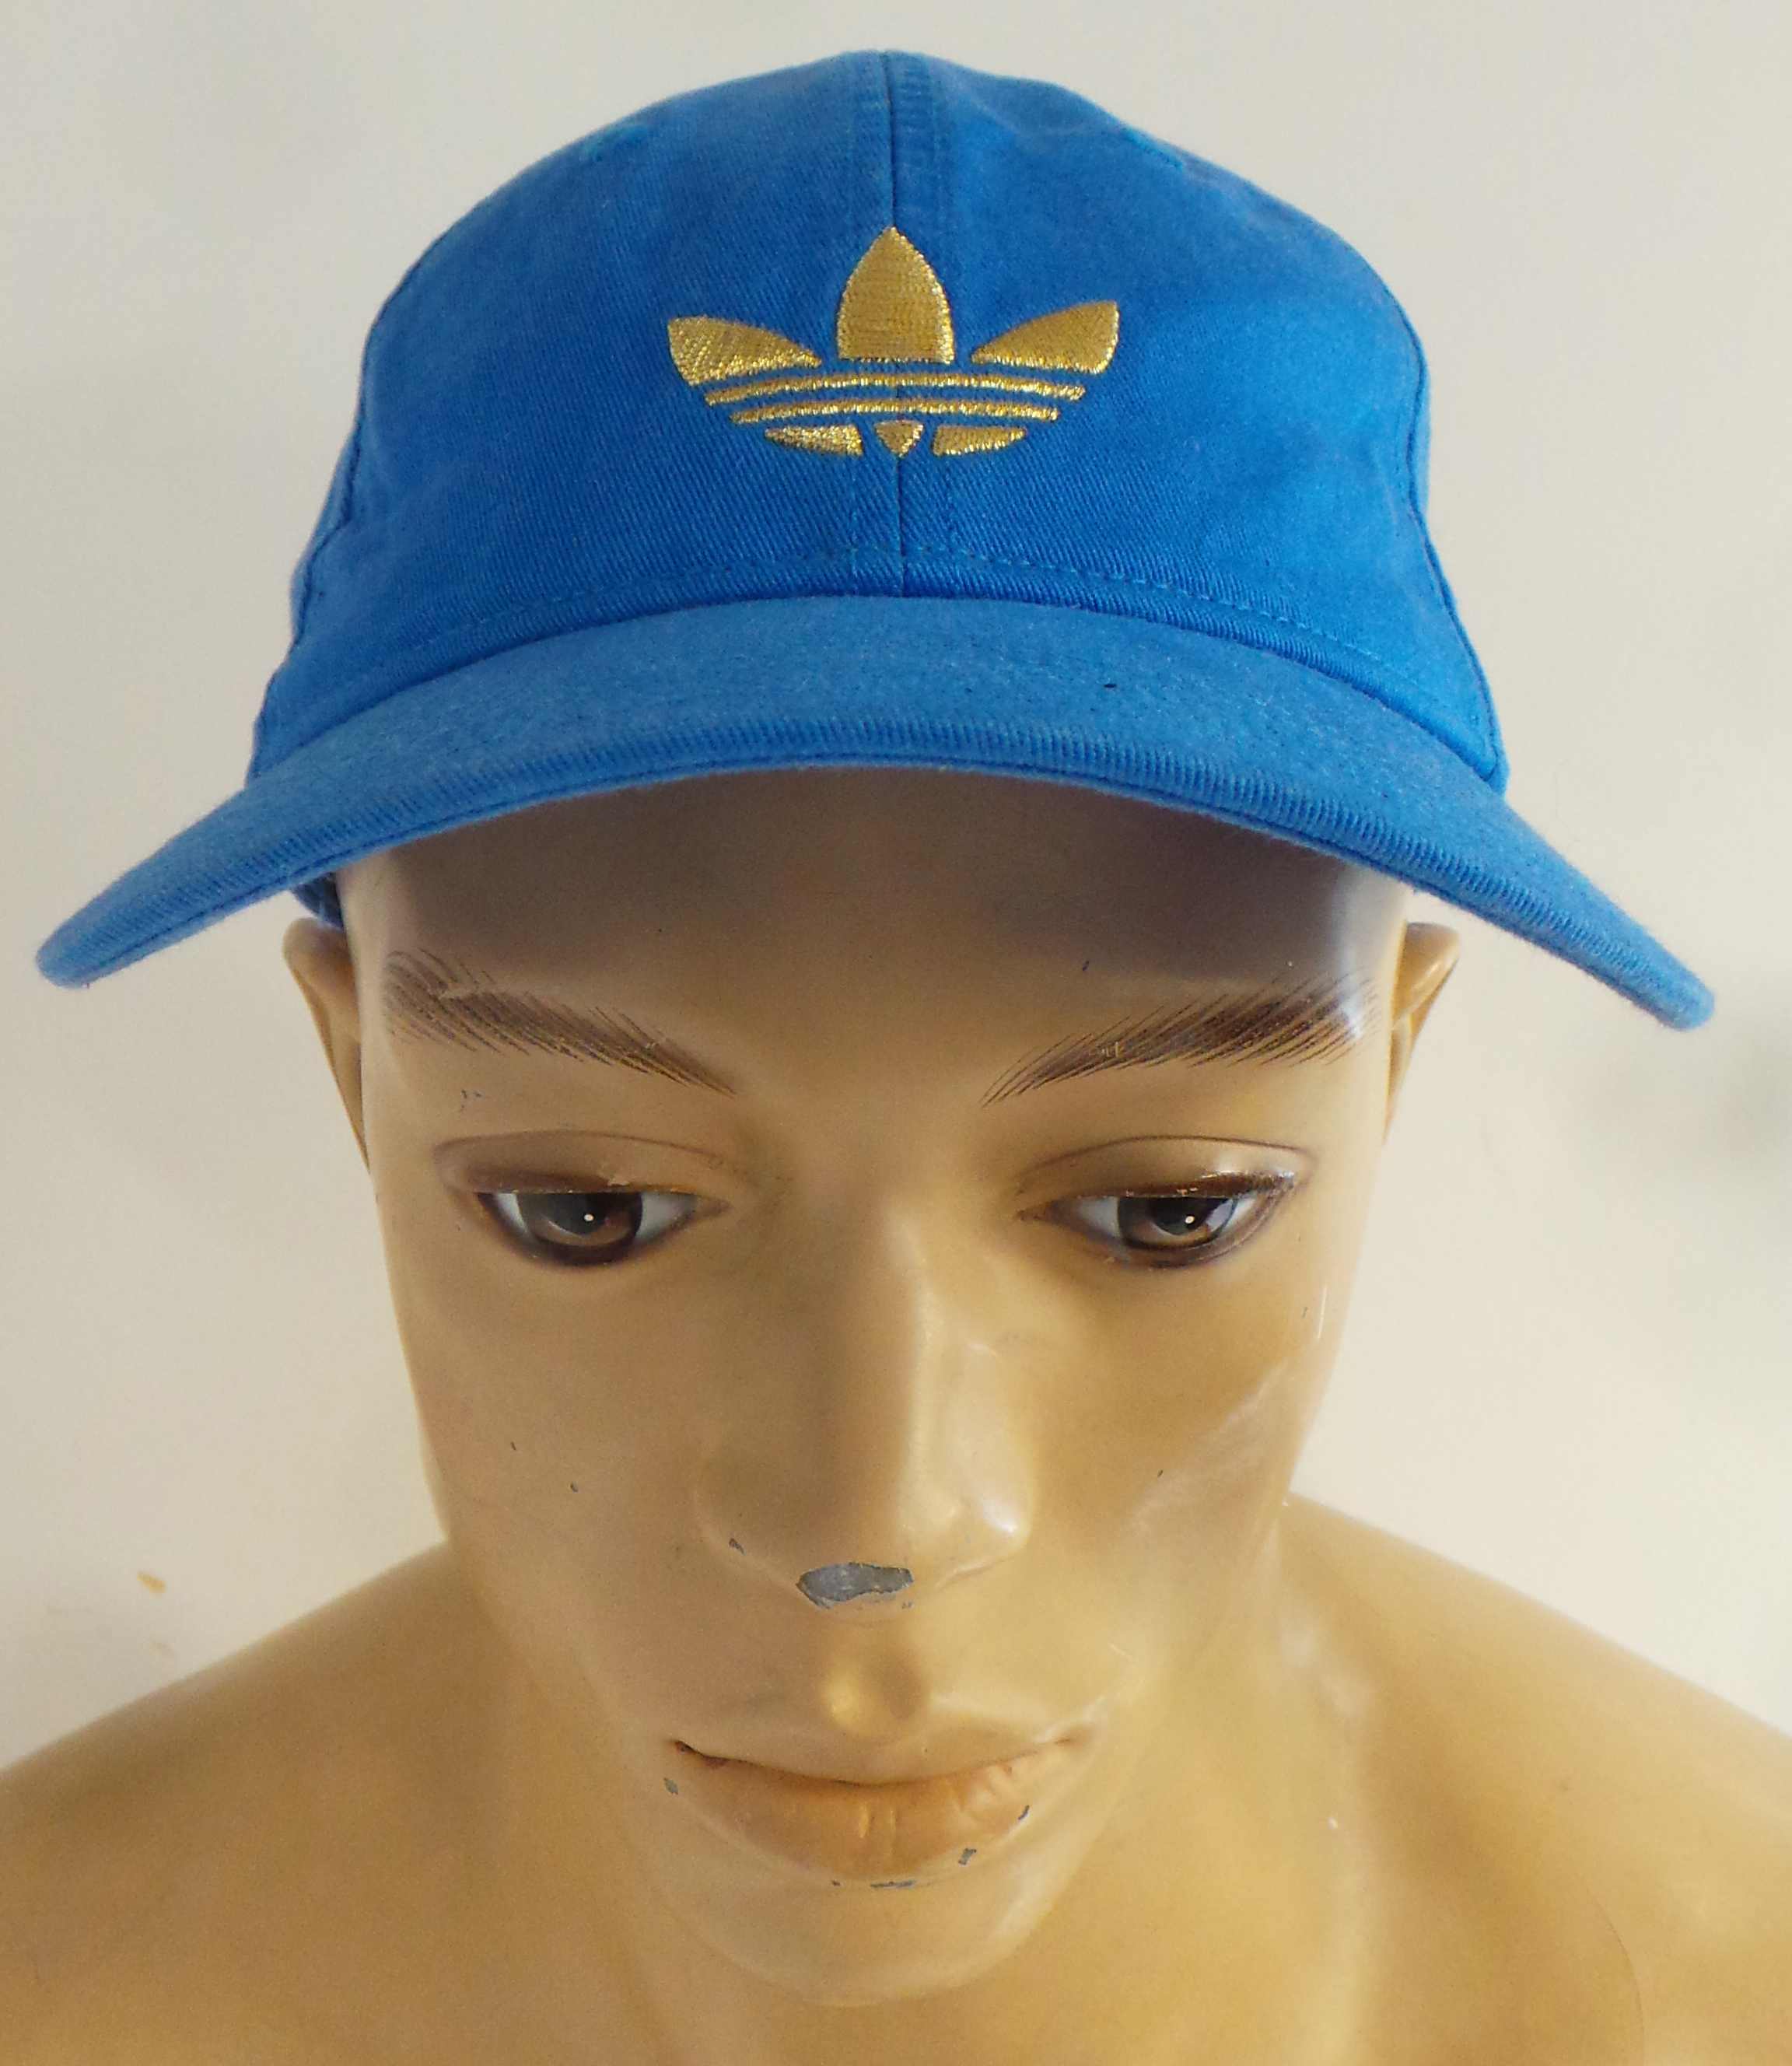 Joblot of 55 Adidas Assorted Headwear - Baseball Caps, Winter Hats Etc